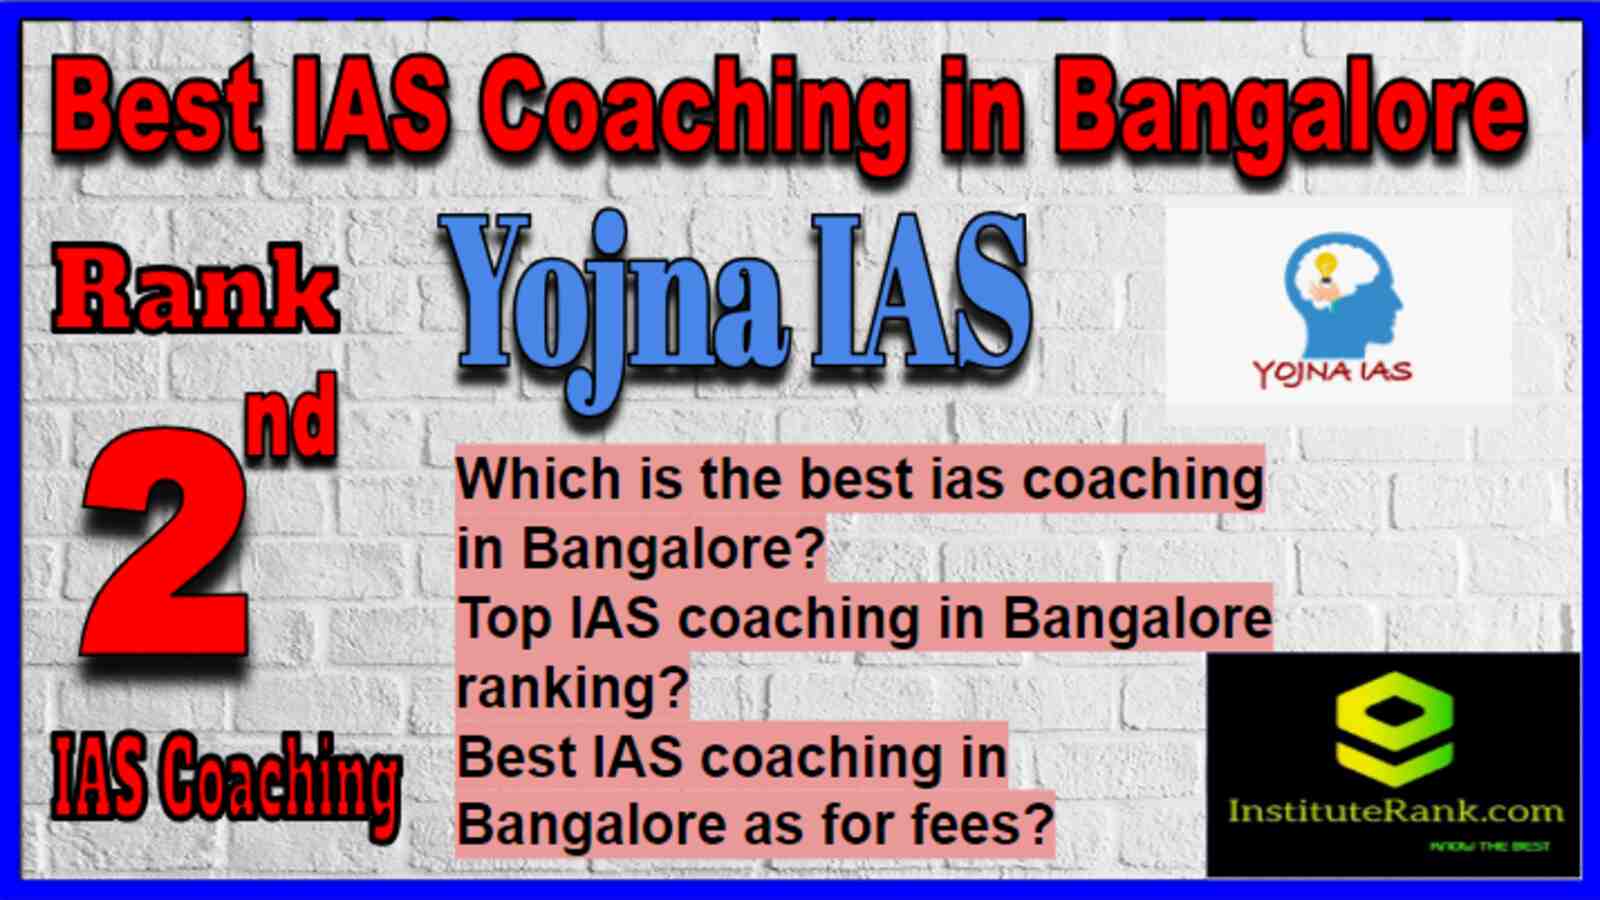 Rank 2 Best IAS Coaching in Bangalore